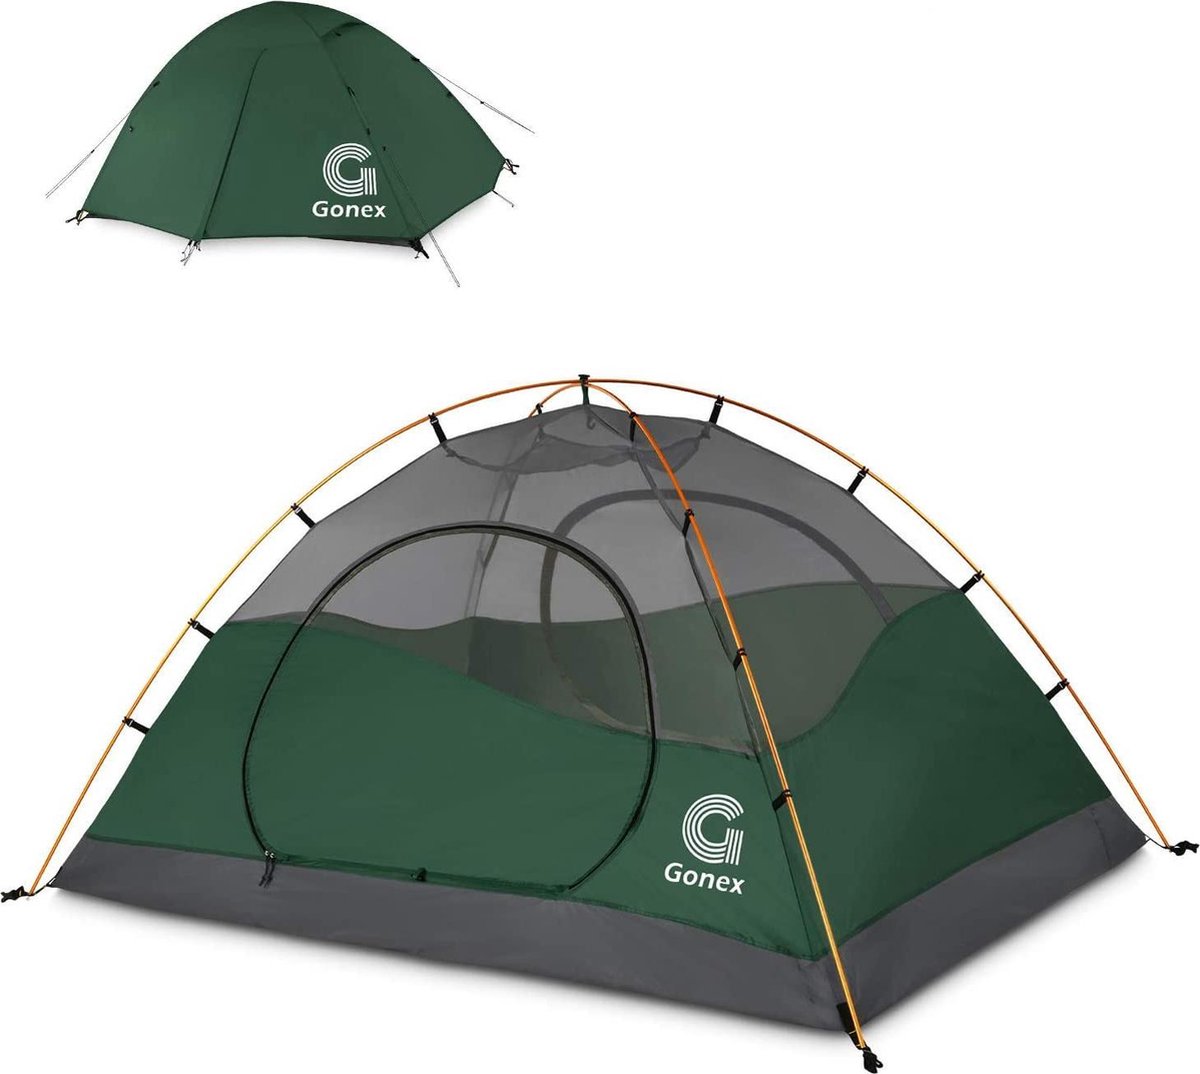 tent 4 persoons -gonex camping 2/4 person tent, ultralight wind waterdichte dome tent, pu2000 mm, 3 seizoenen, easy setup voor trekking, gezinnen, festivals, backpacken en bergbeklimmen - (WK 02123)